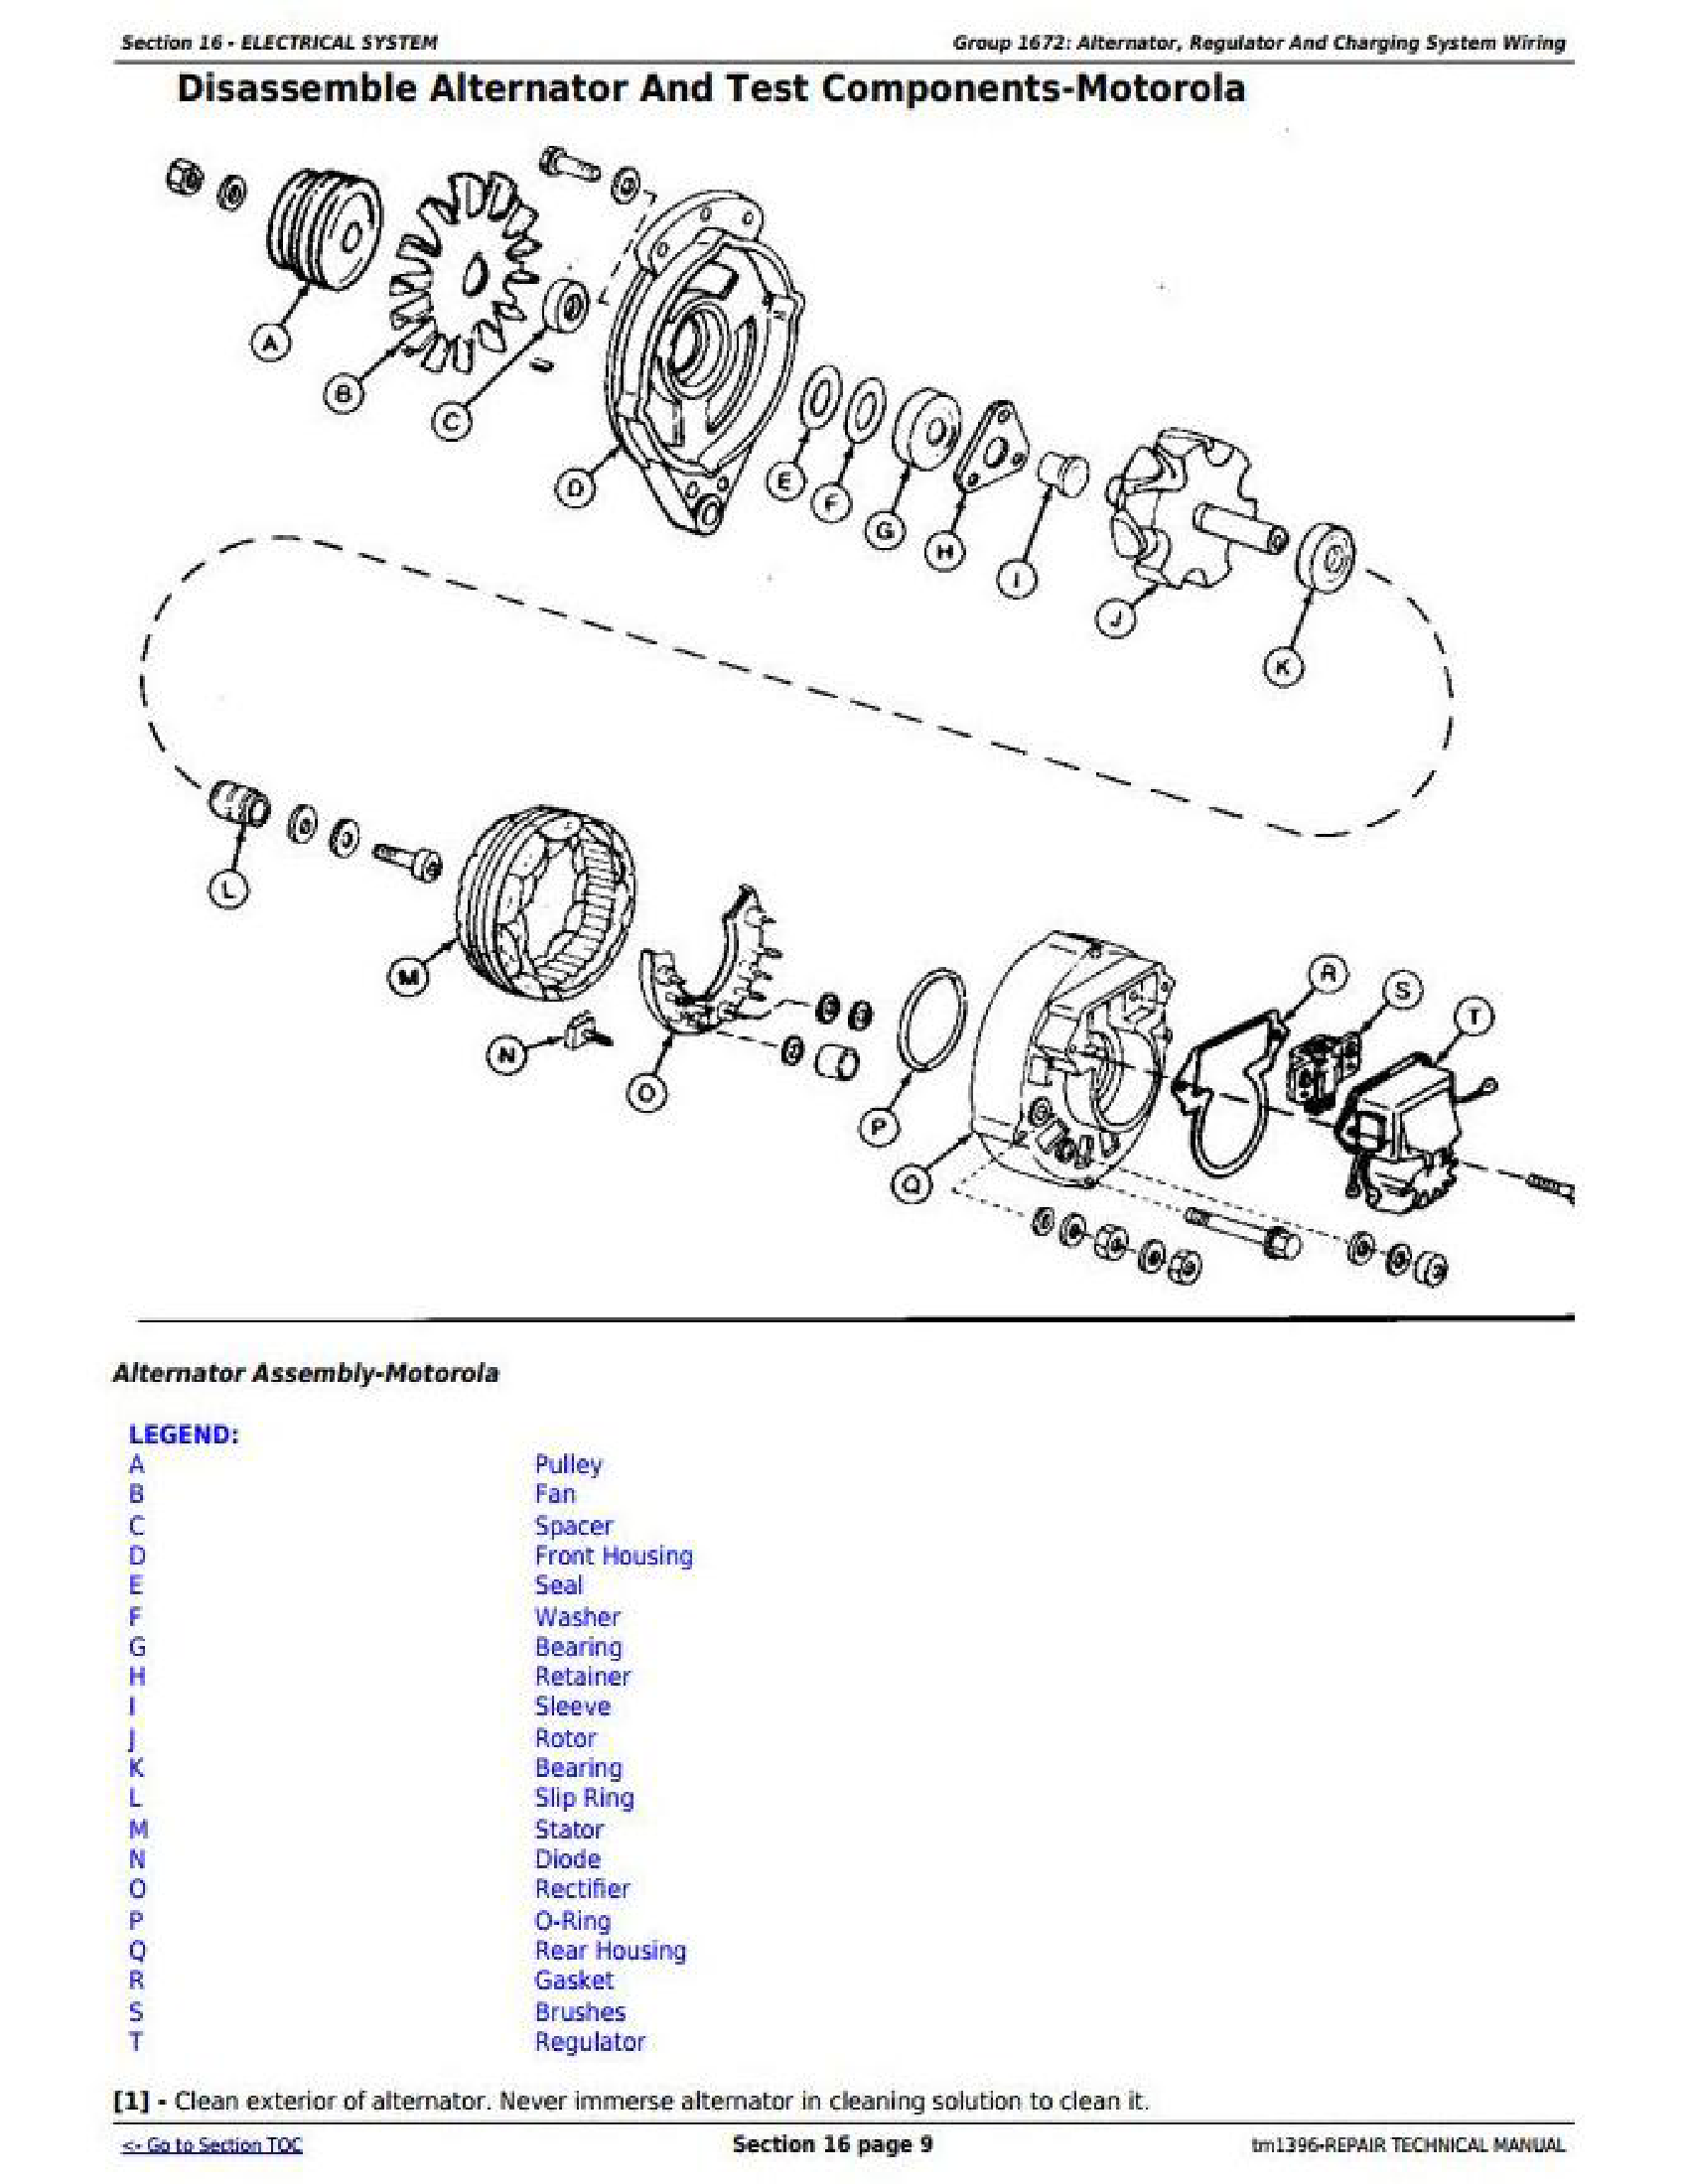 John Deere CH570 manual pdf